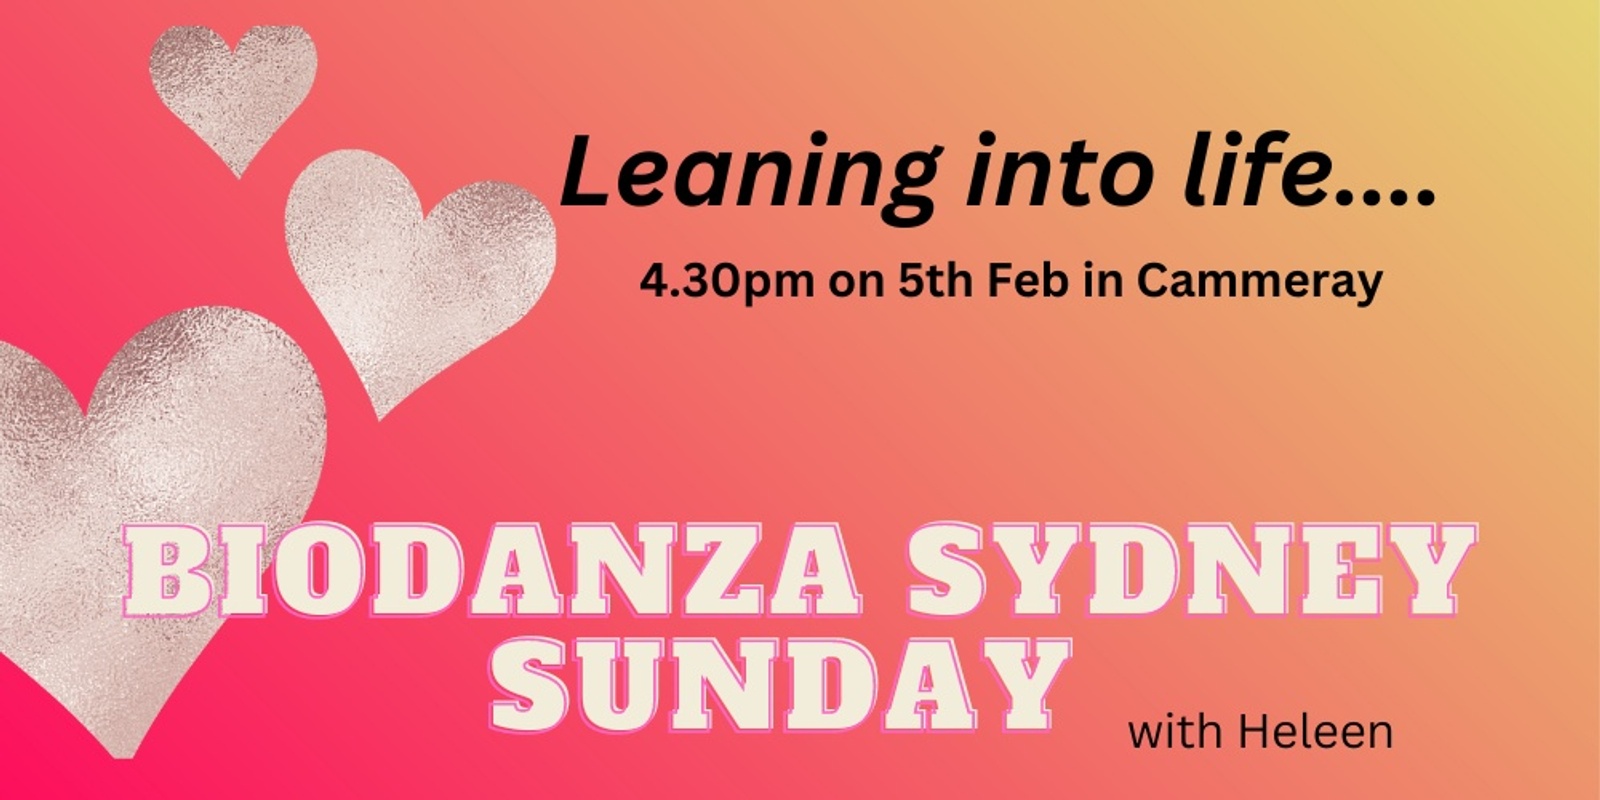 Banner image for Biodanza Sydney Sunday